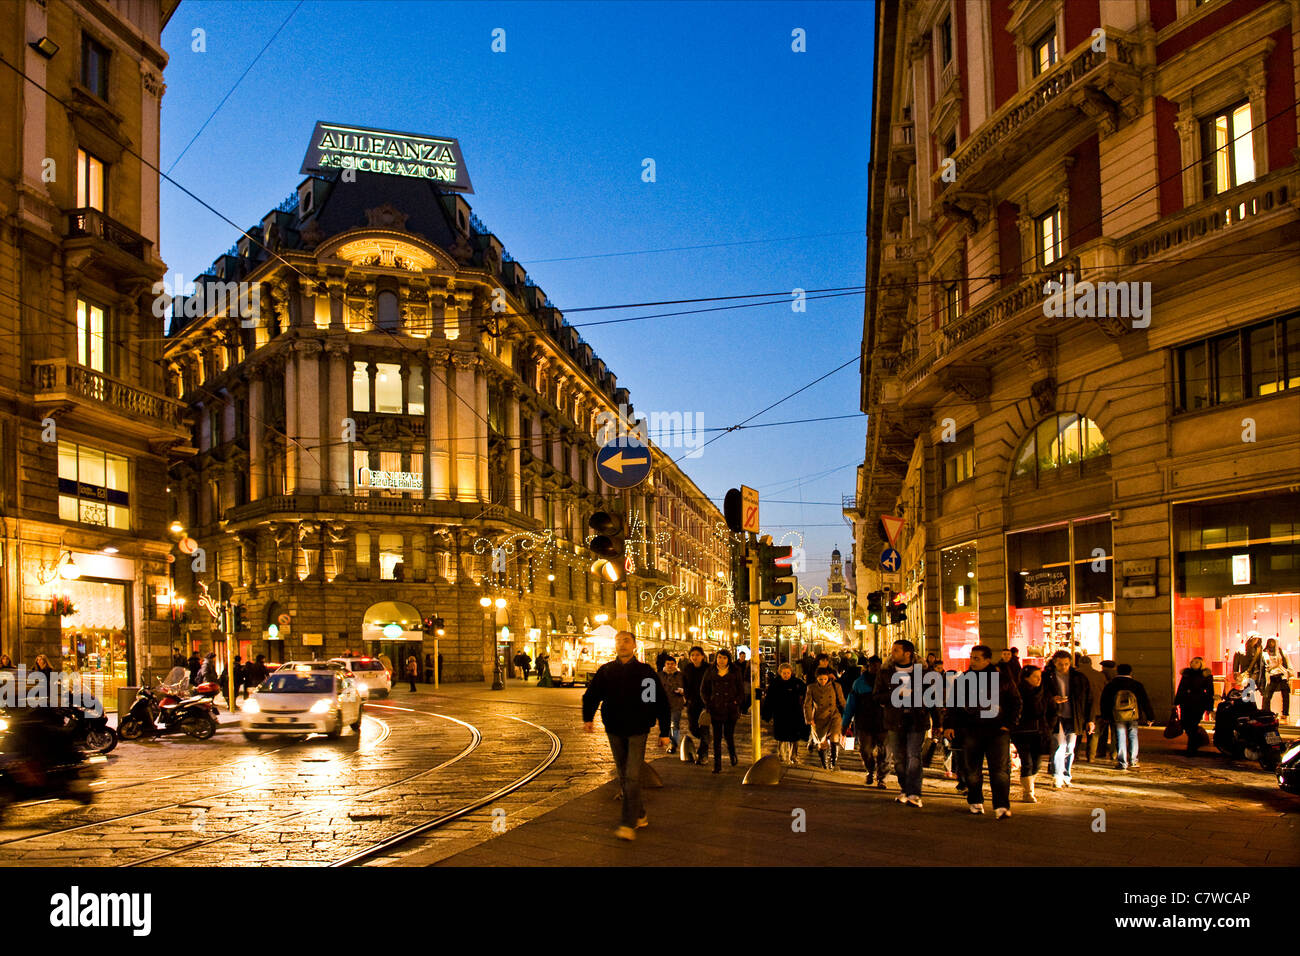 Italy, Lombardy, Milan, Via Torino at Christmas time Stock Photo, Royalty Free Image: 39281838 